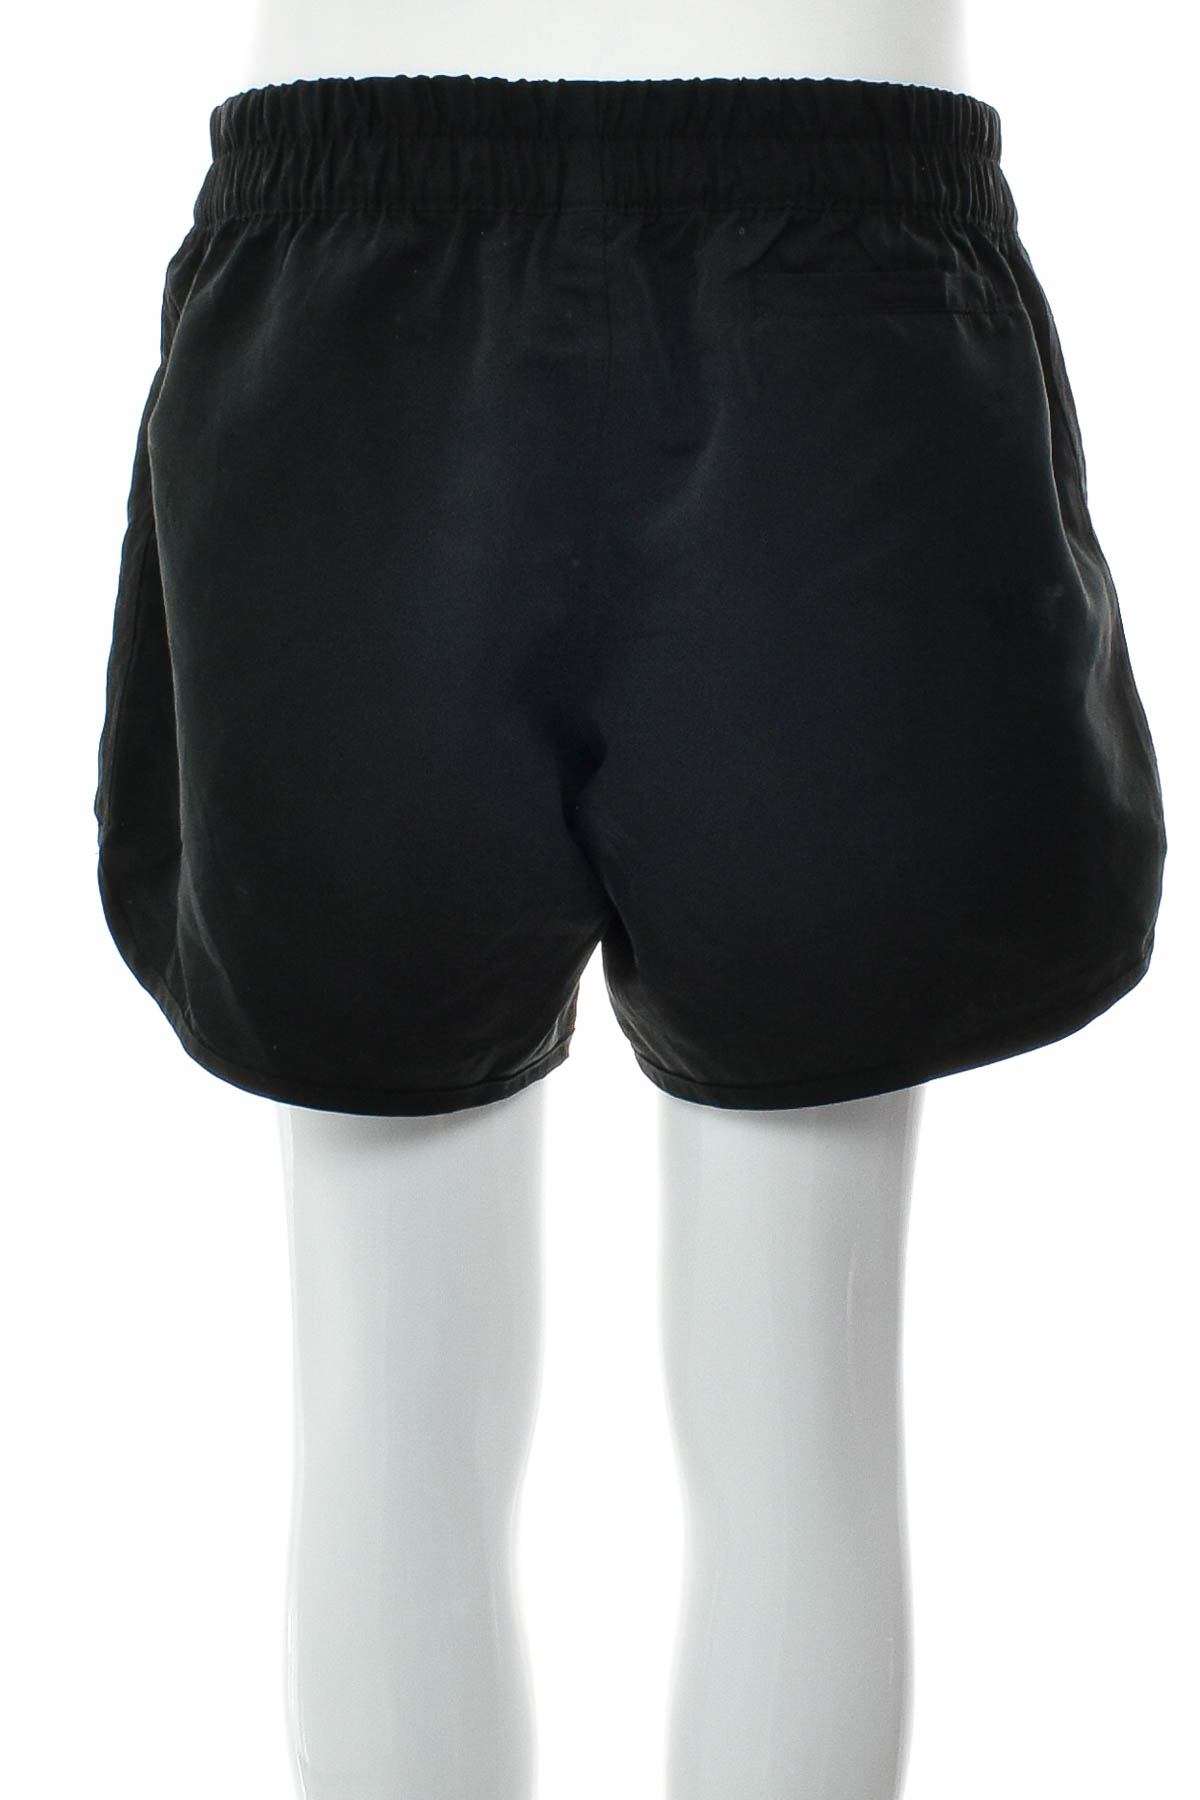 Women's shorts - Lascana - 1